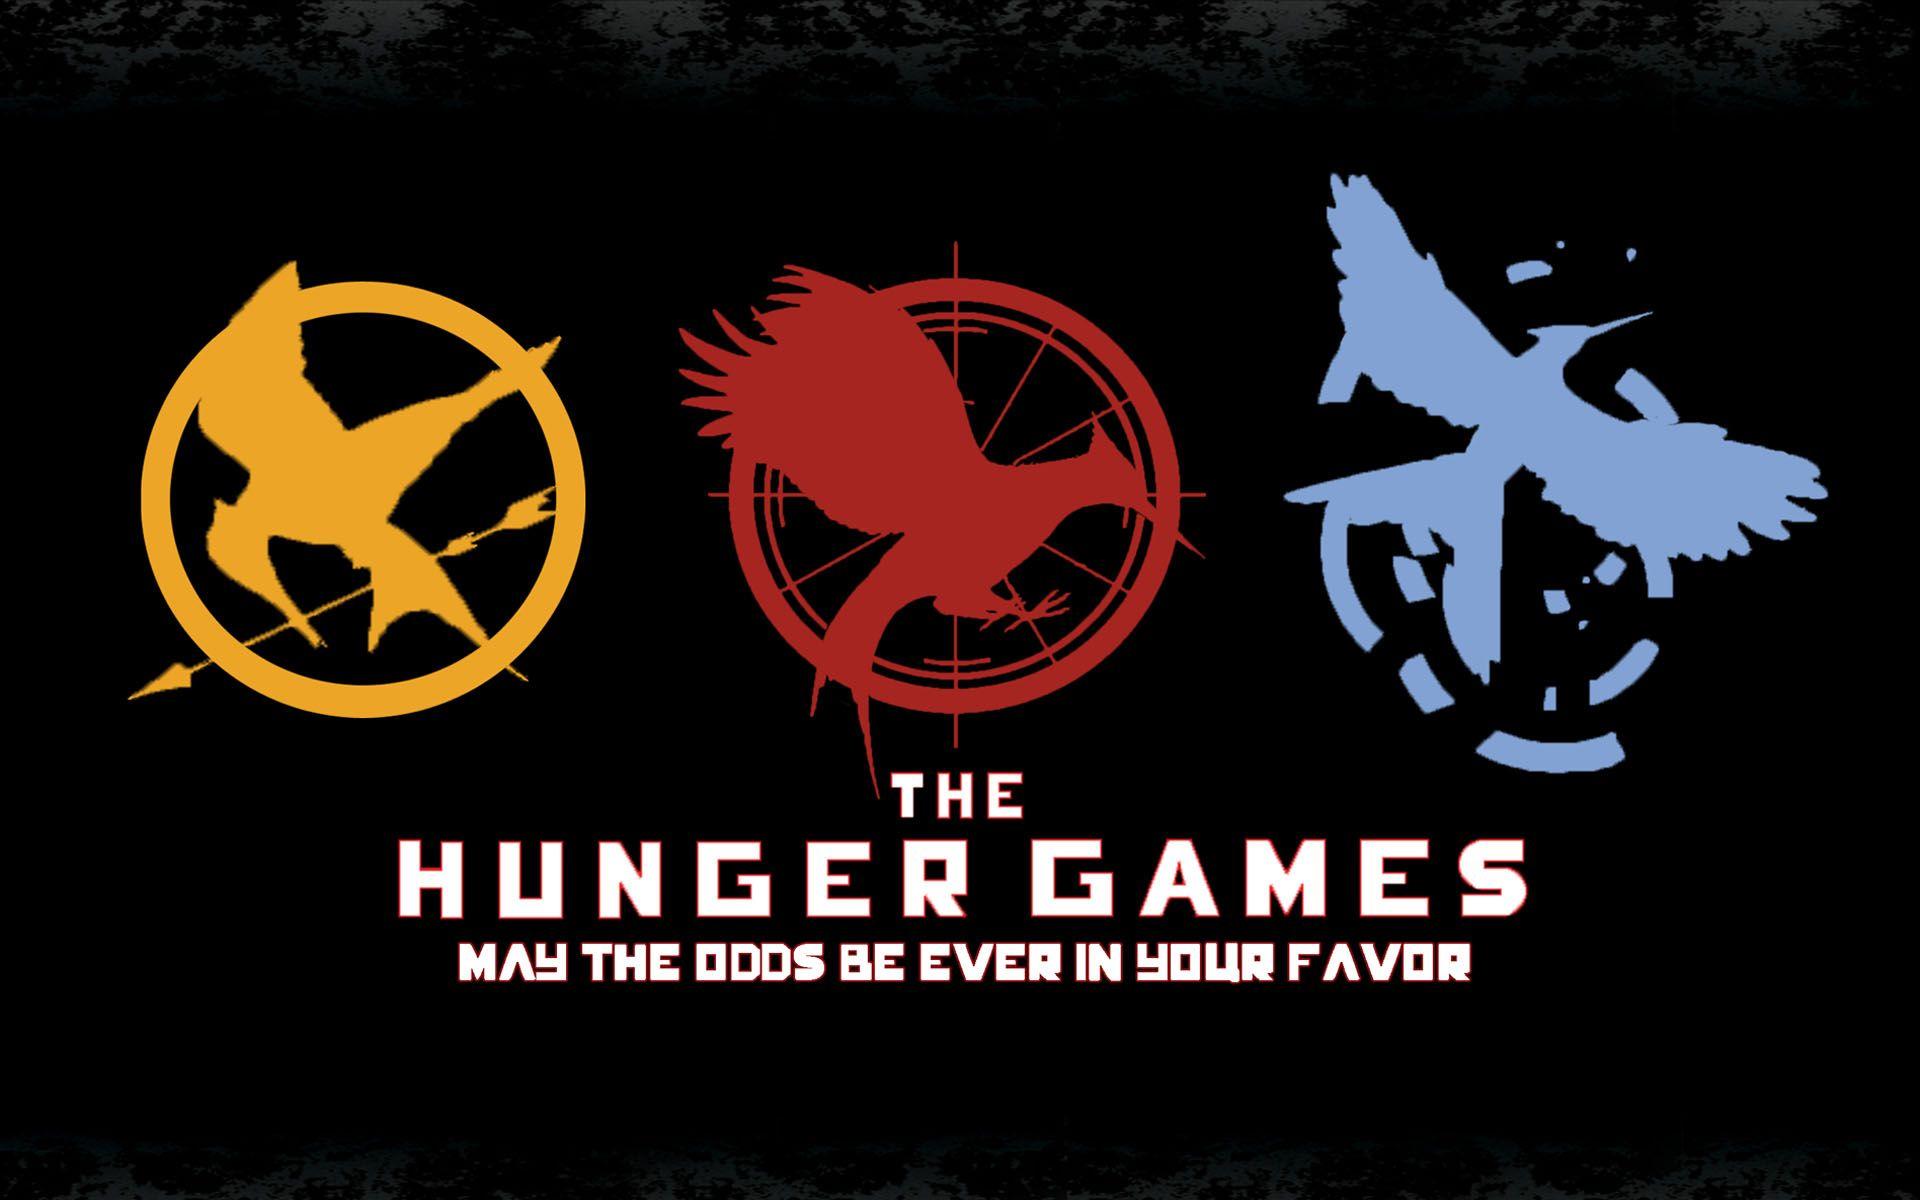 The Hunger Games Logos wallpaper. The Hunger Games Logos